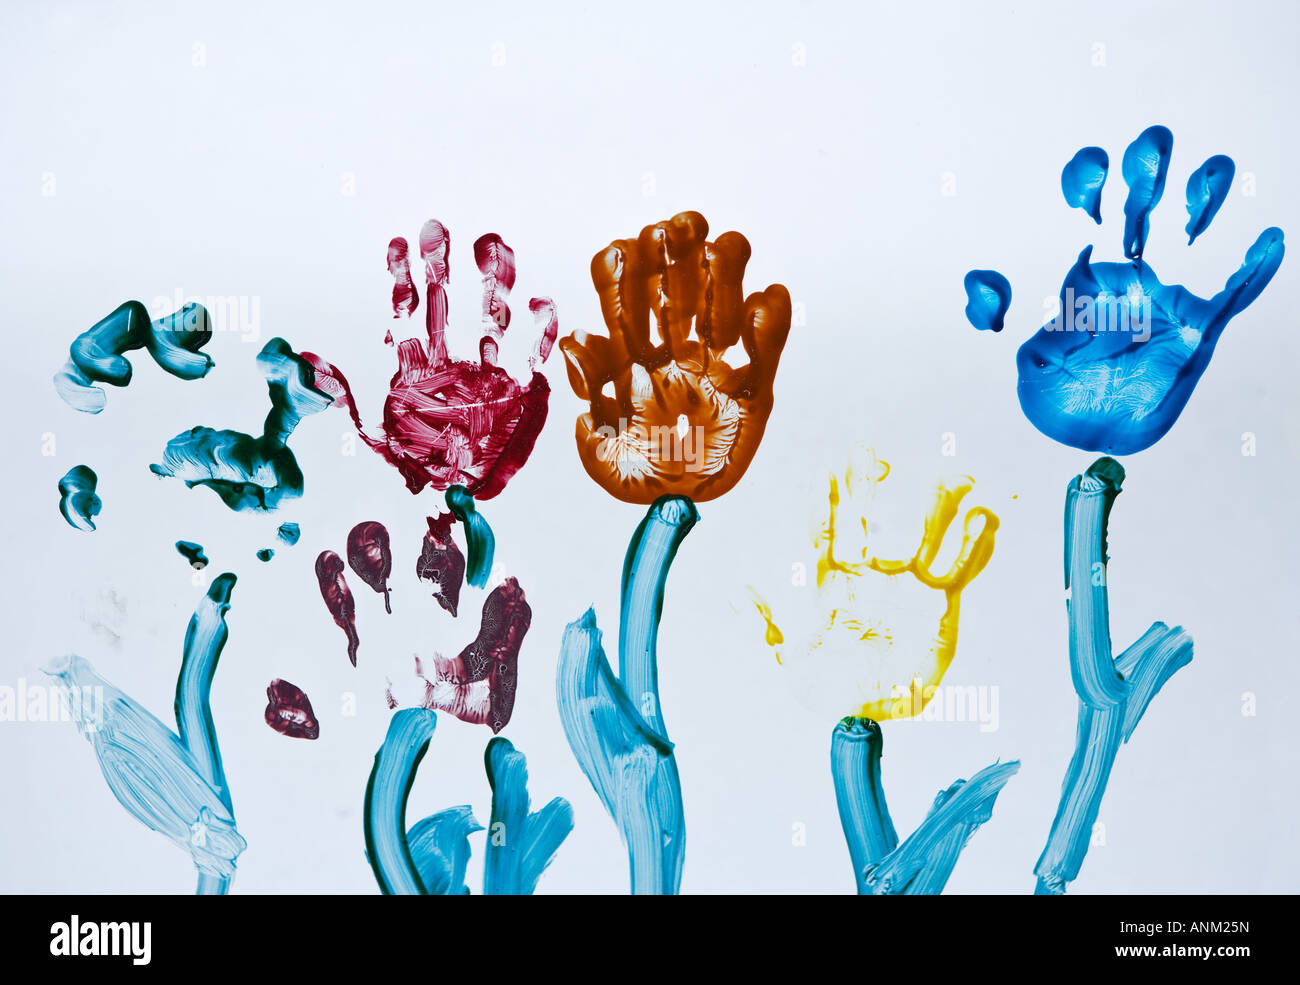 Children's handprints create flowers Stock Photo